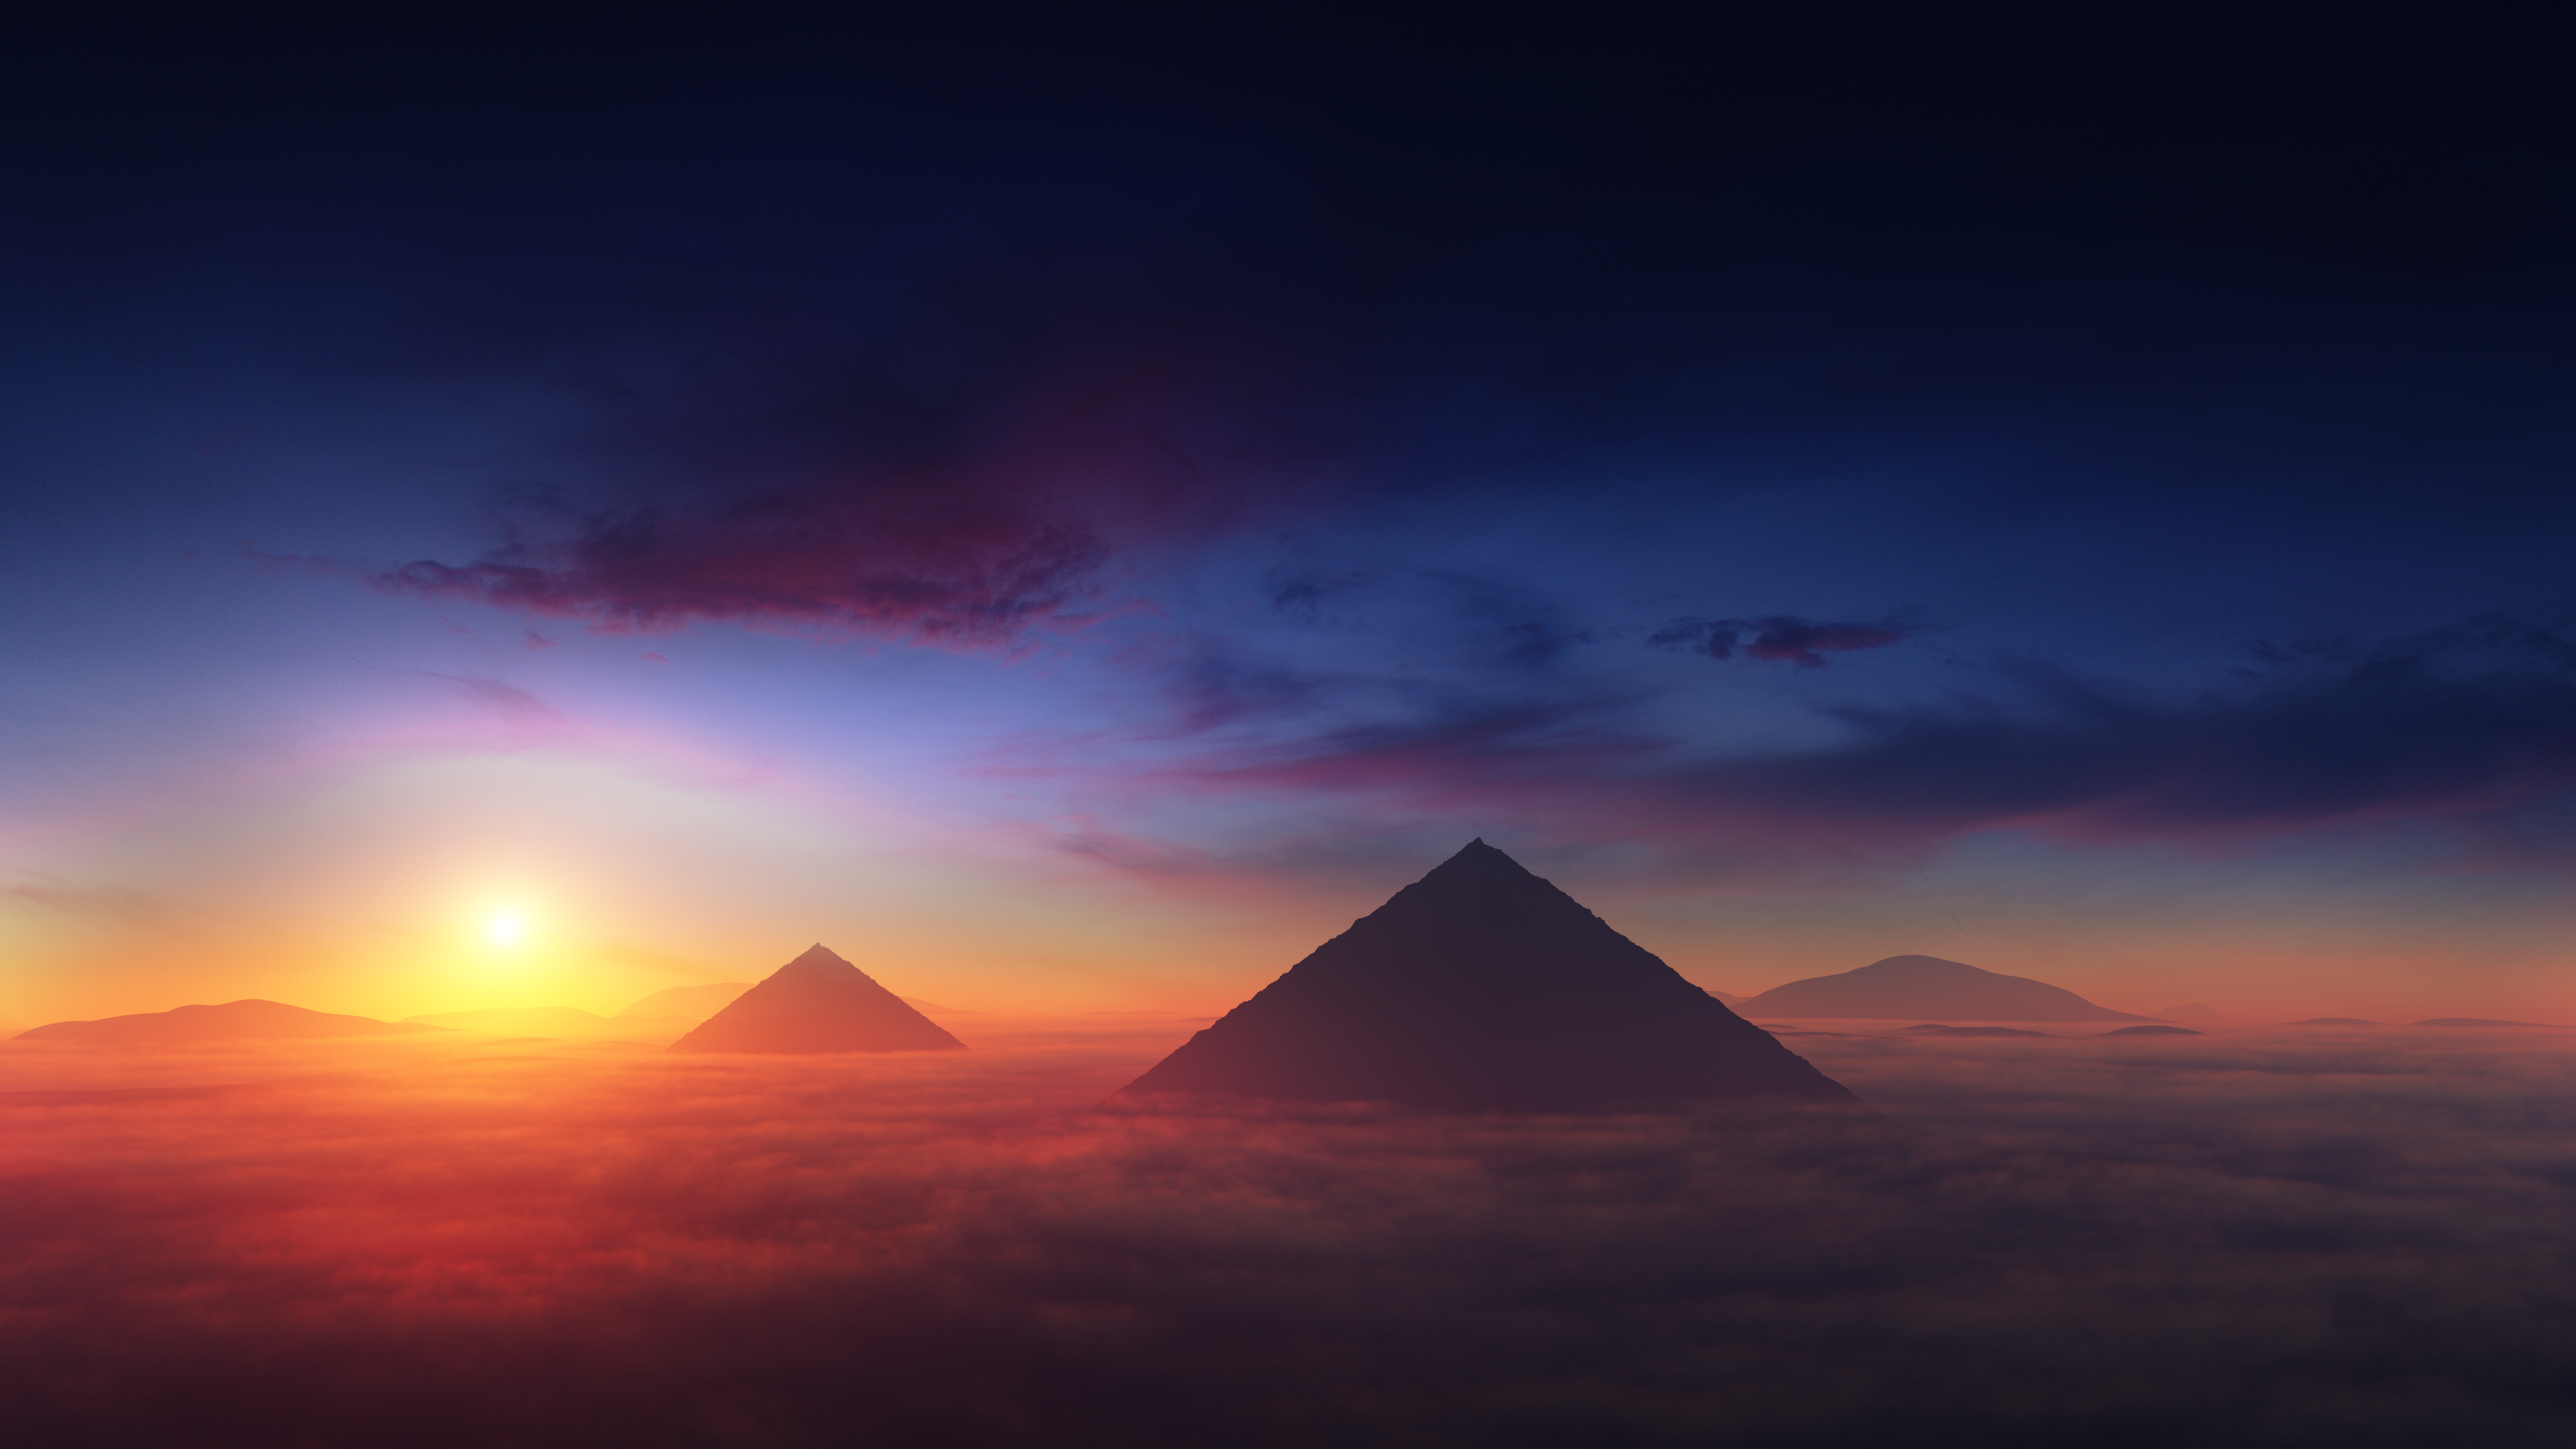 Digital Digital Art Artwork Illustration Render Landscape Sky Clouds Sunset Pyramid Hypnoshot Sun 3840x2160